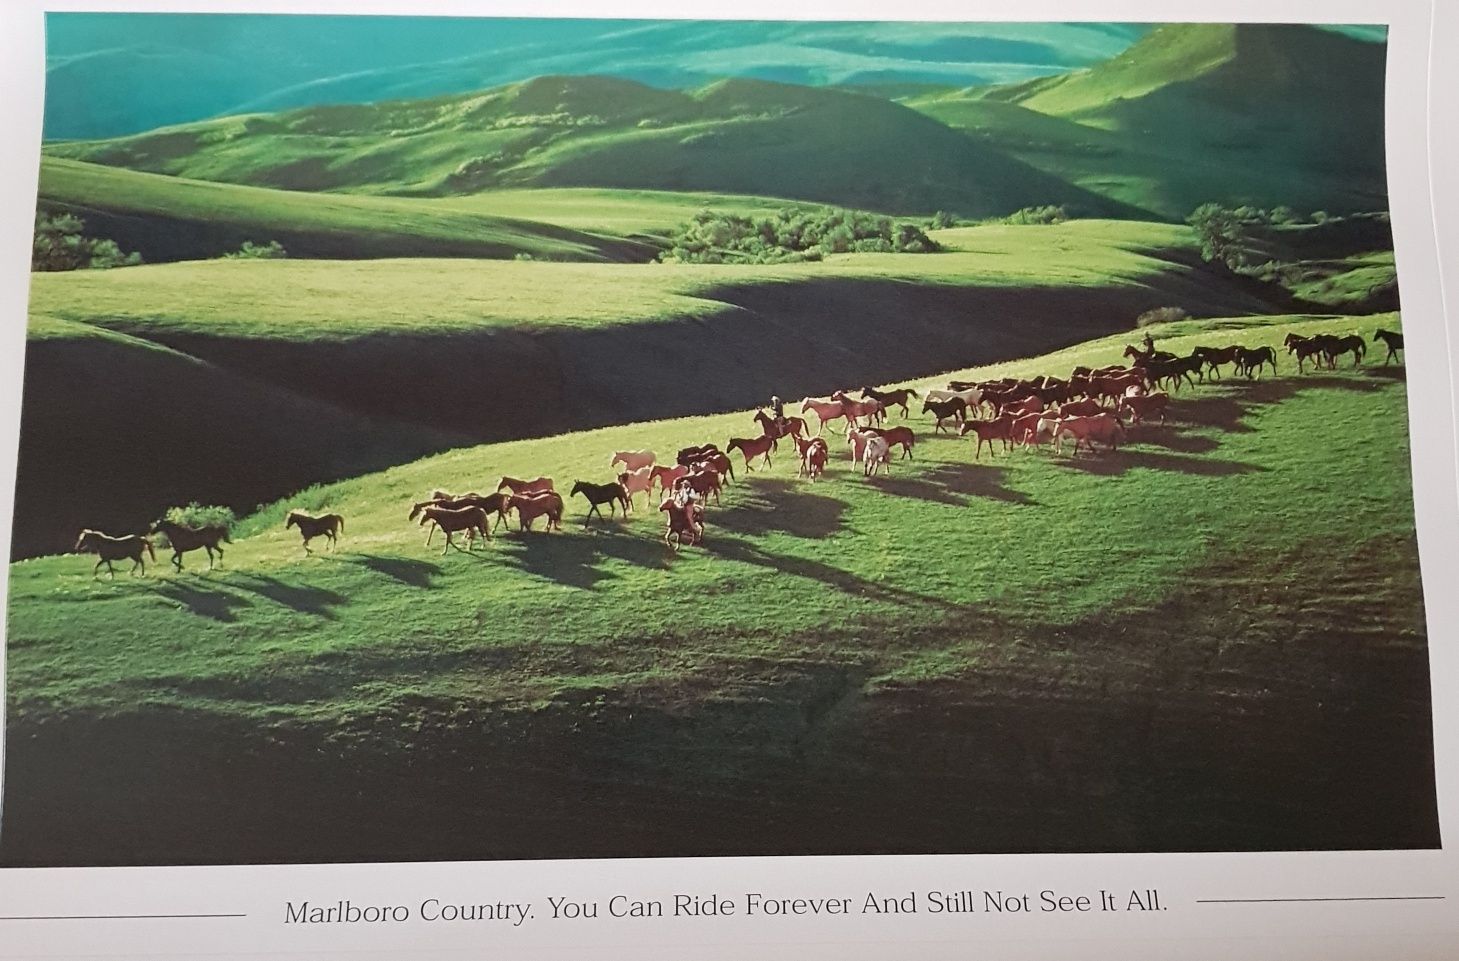 Календарь настоящий американский Marlboro Country - 2000, формата А1